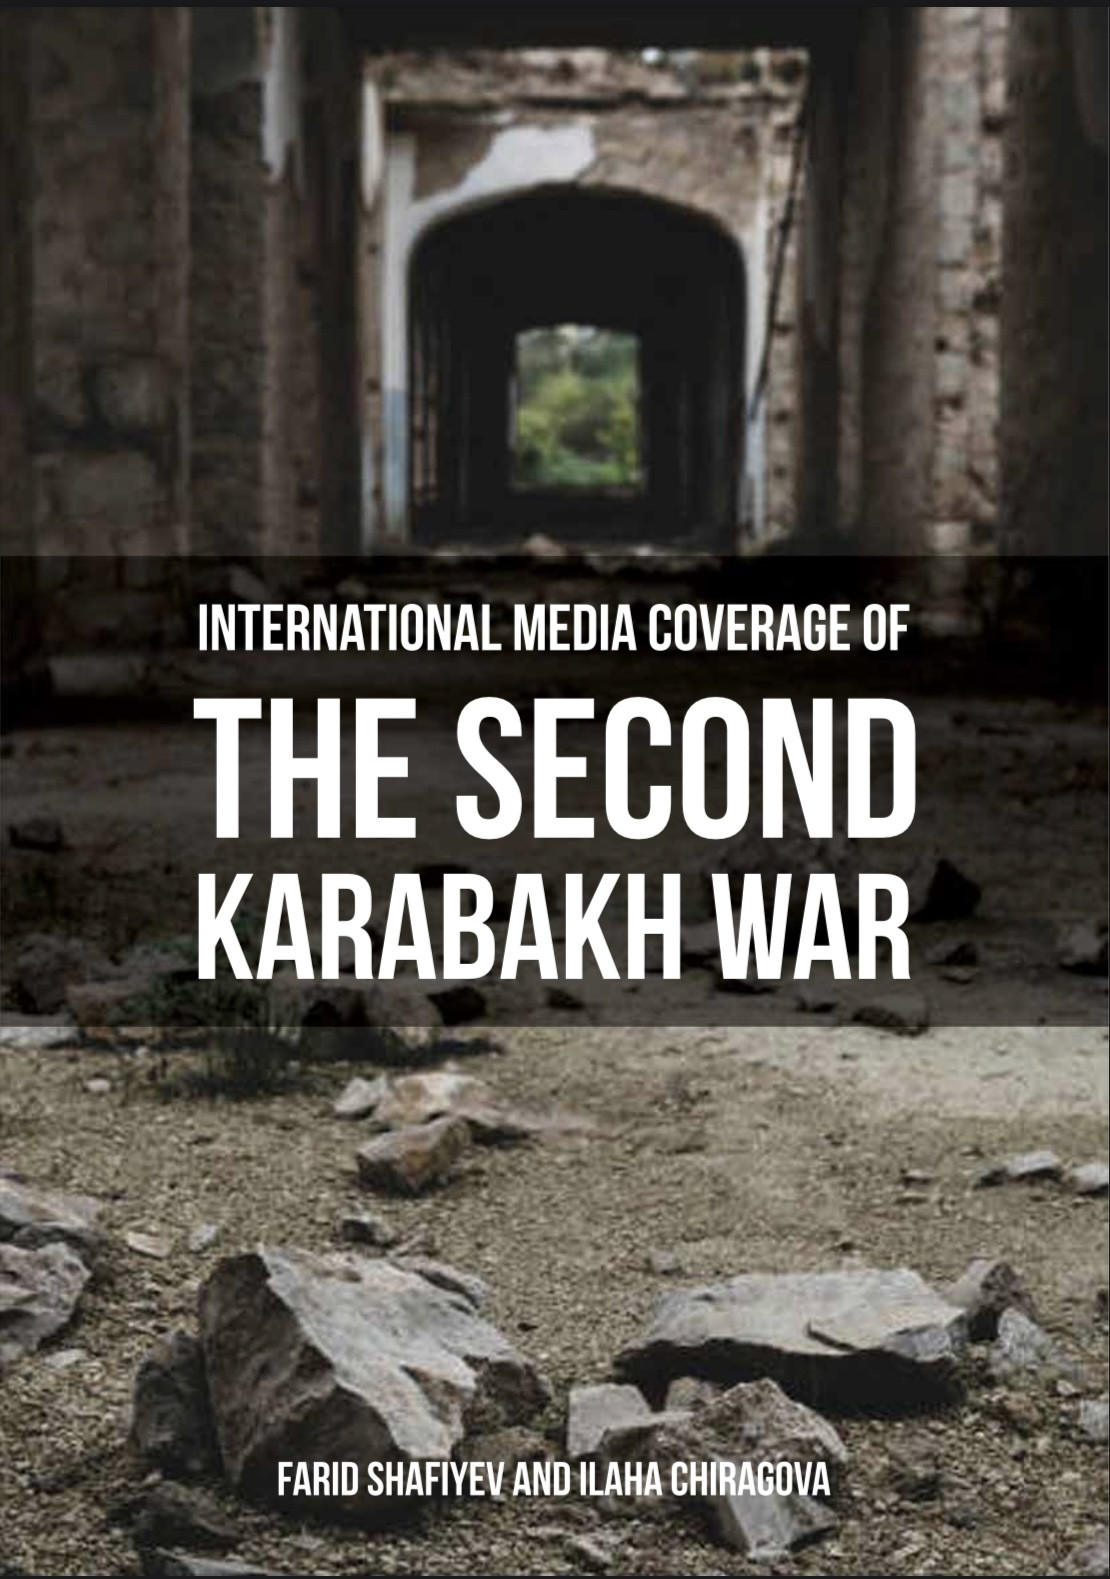 INTERNATIONAL MEDIA COVERAGE OF THE SECOND KARABAKH WAR